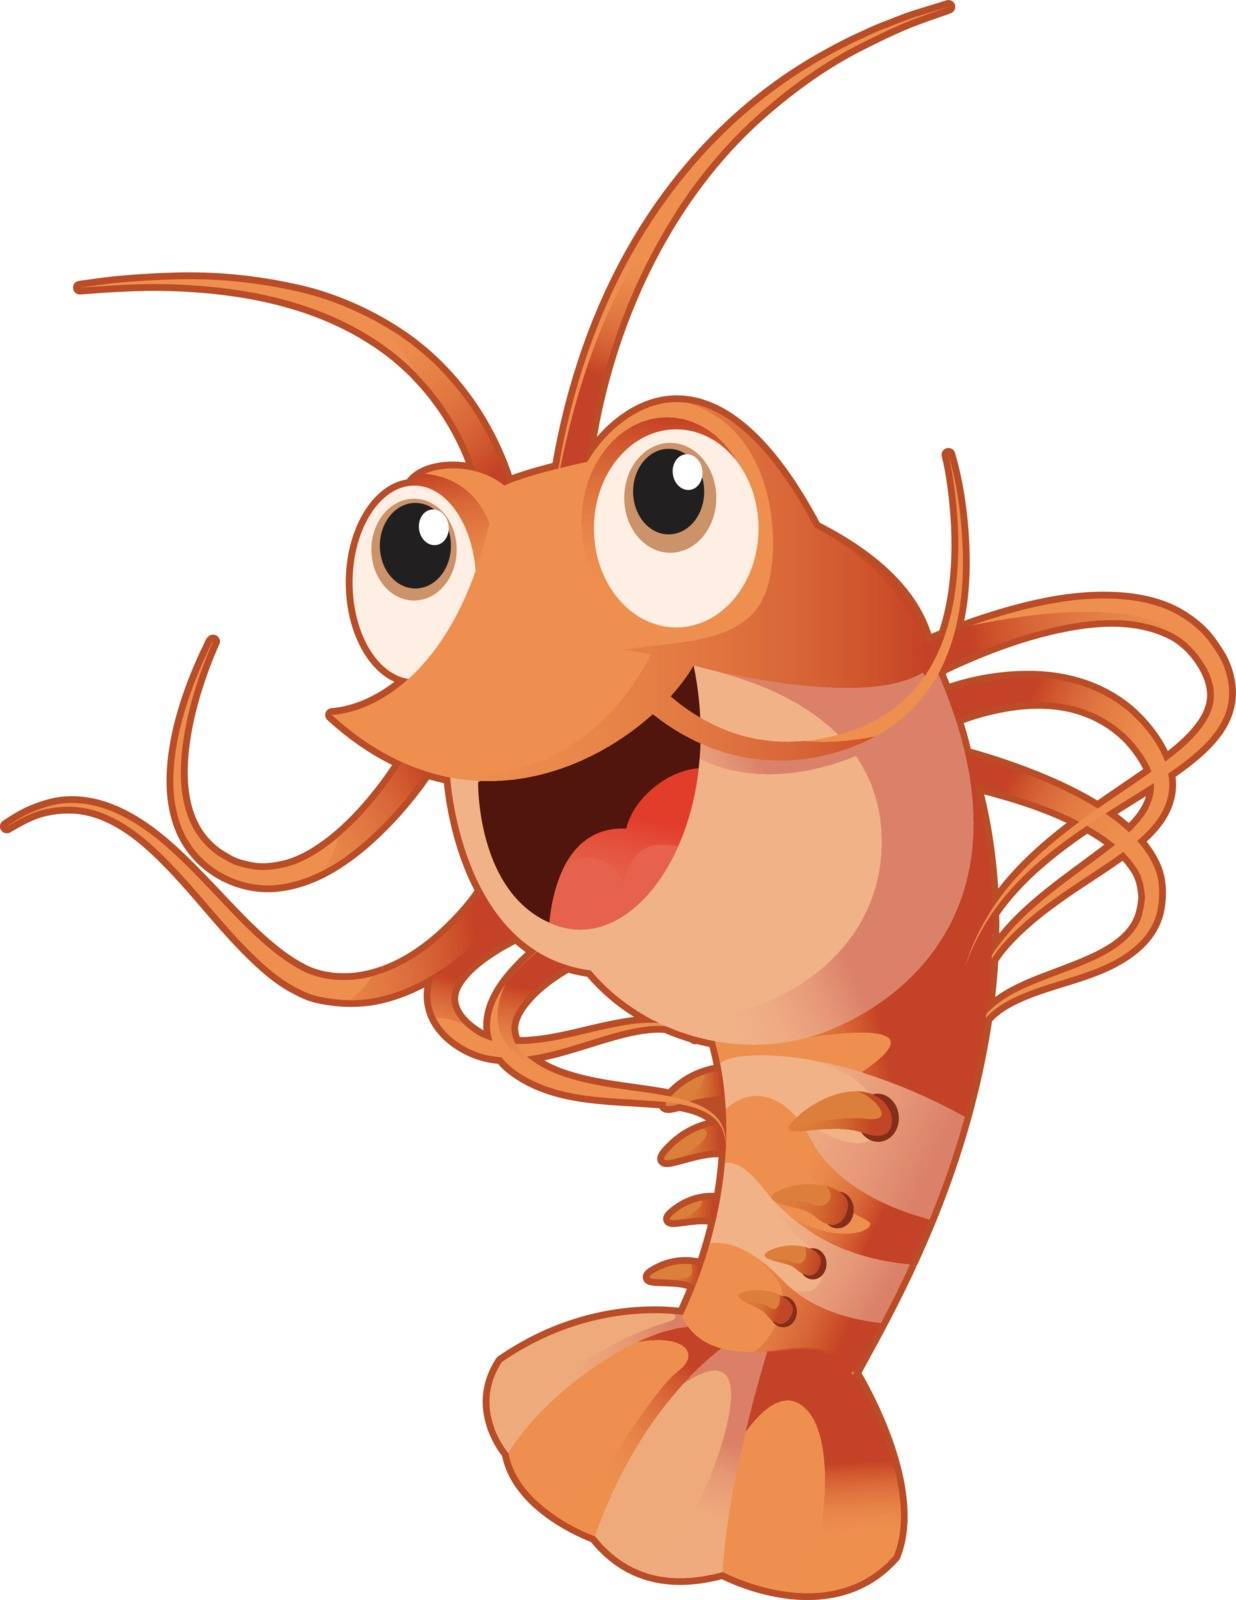 Funny shrimp by Amplion